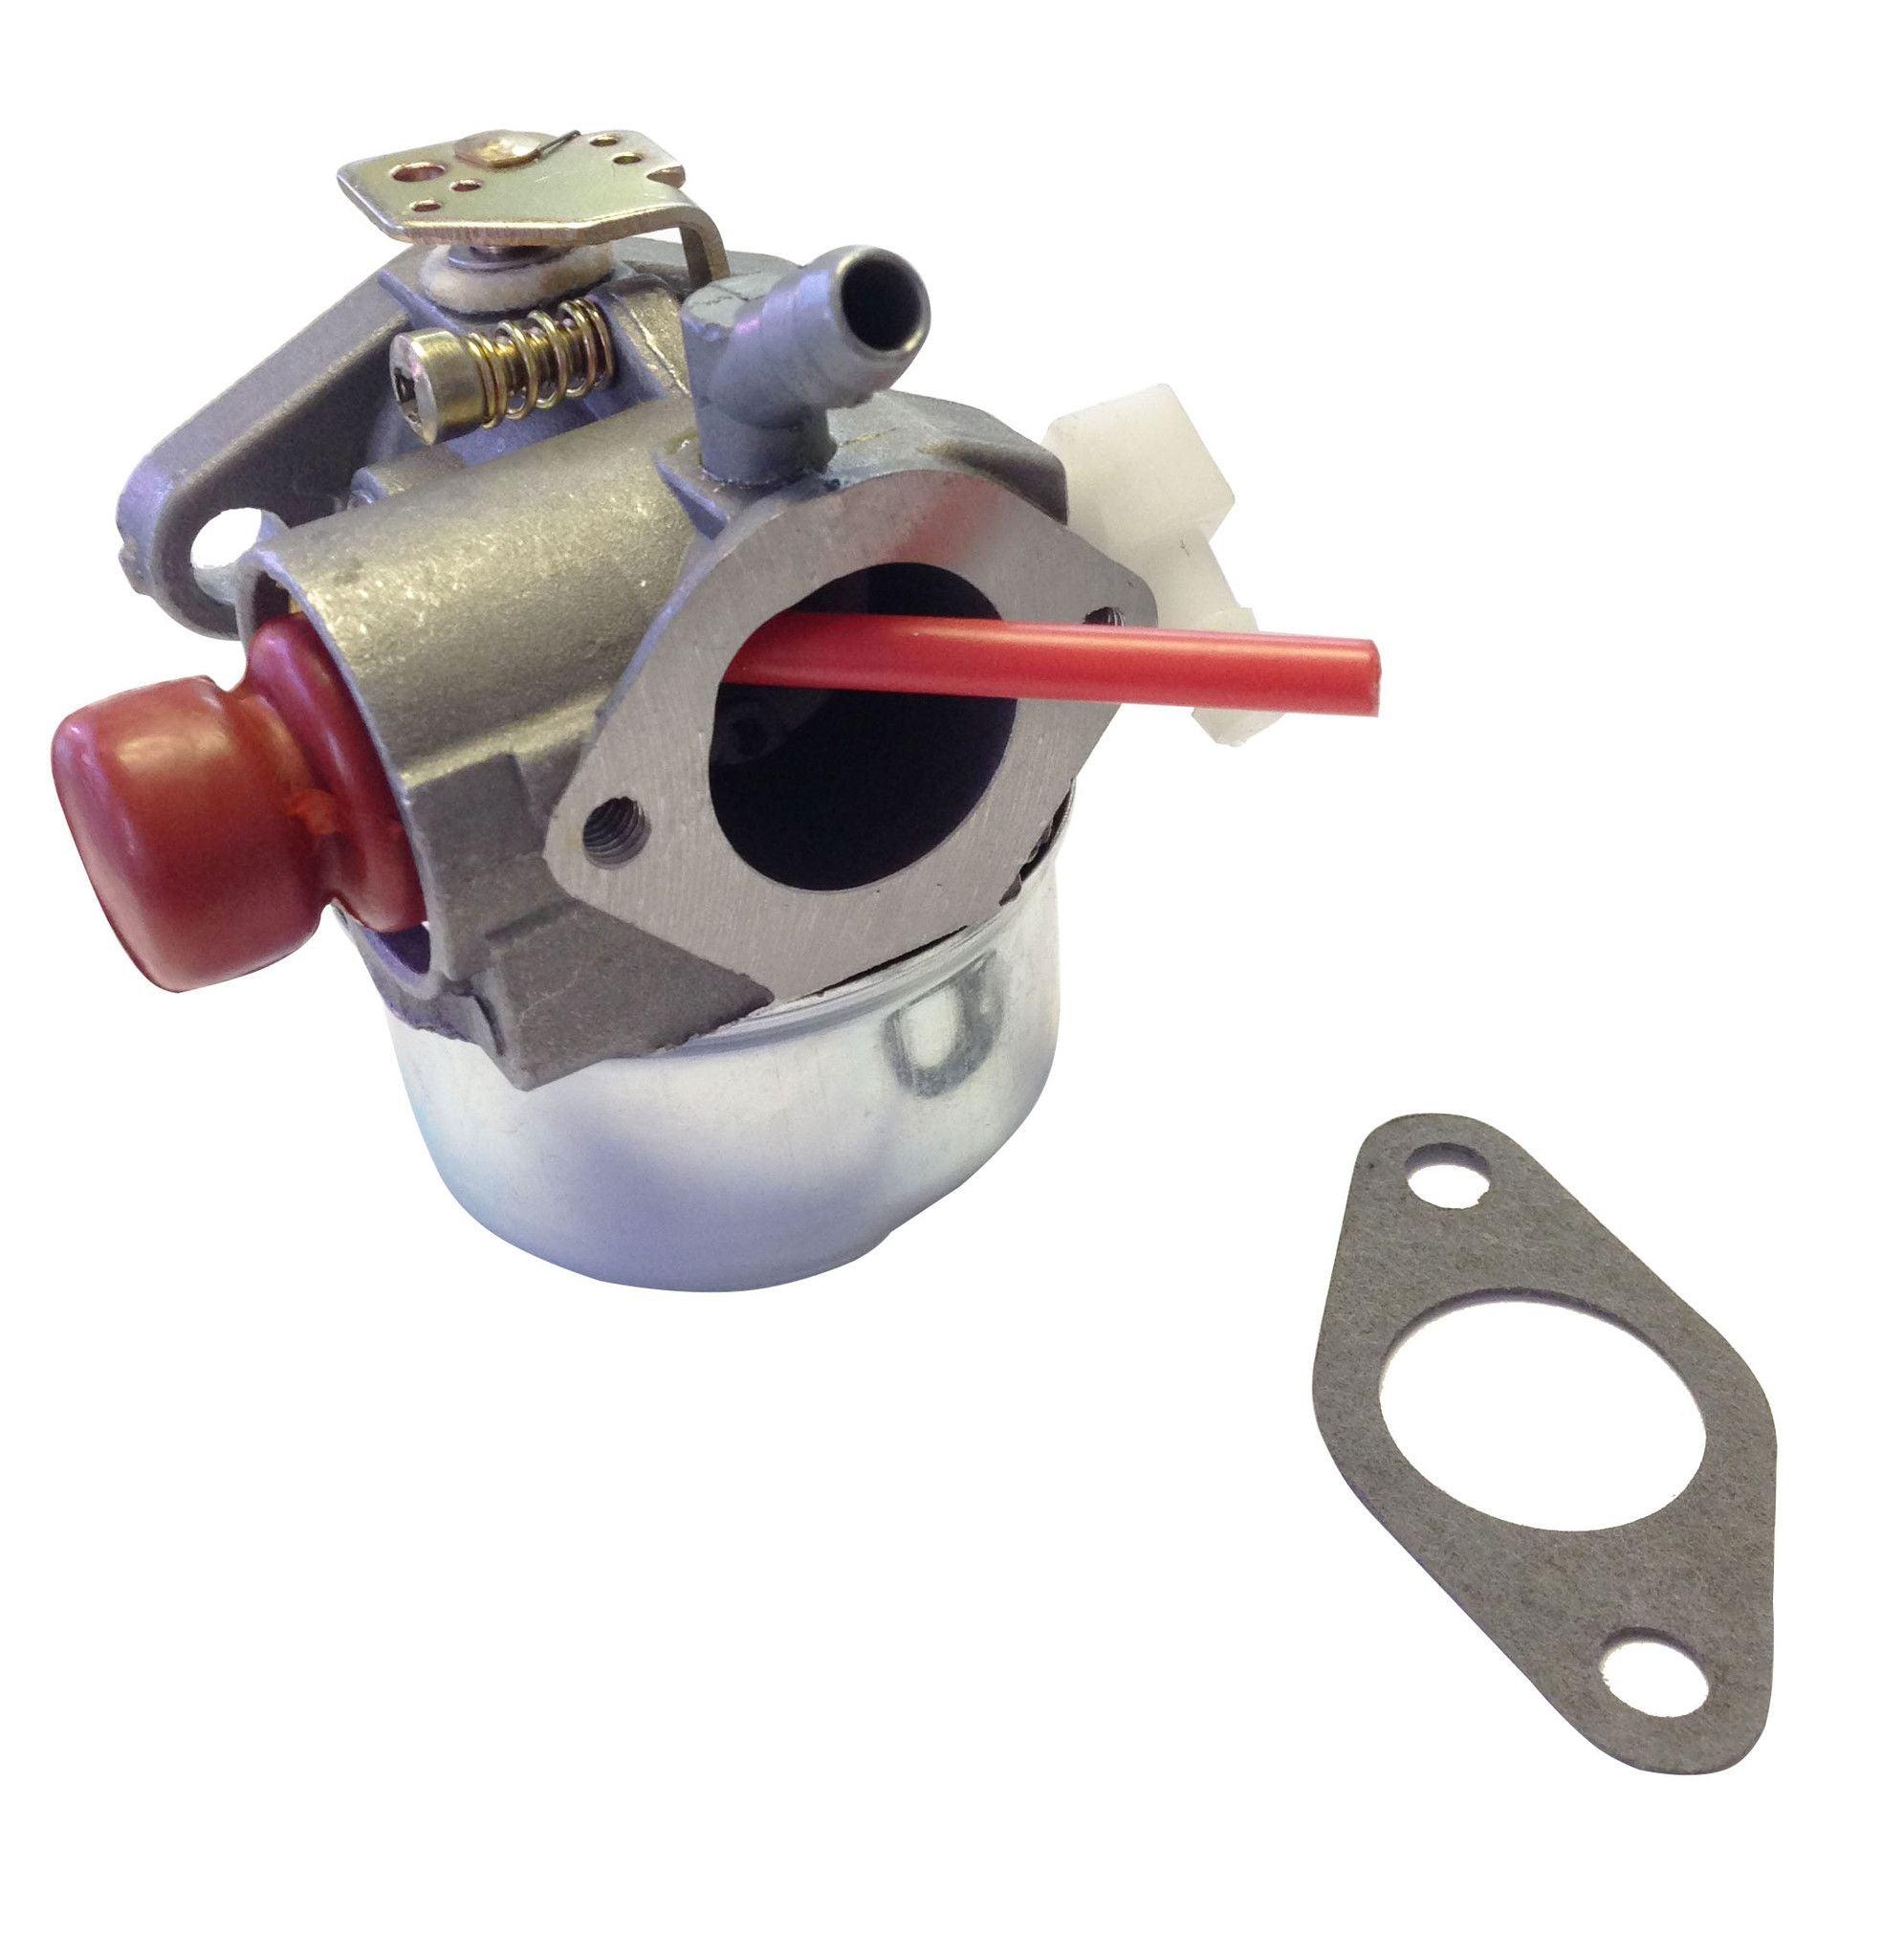 Replacement Carburetor for Tecumseh Lawn Mower Engine 640350